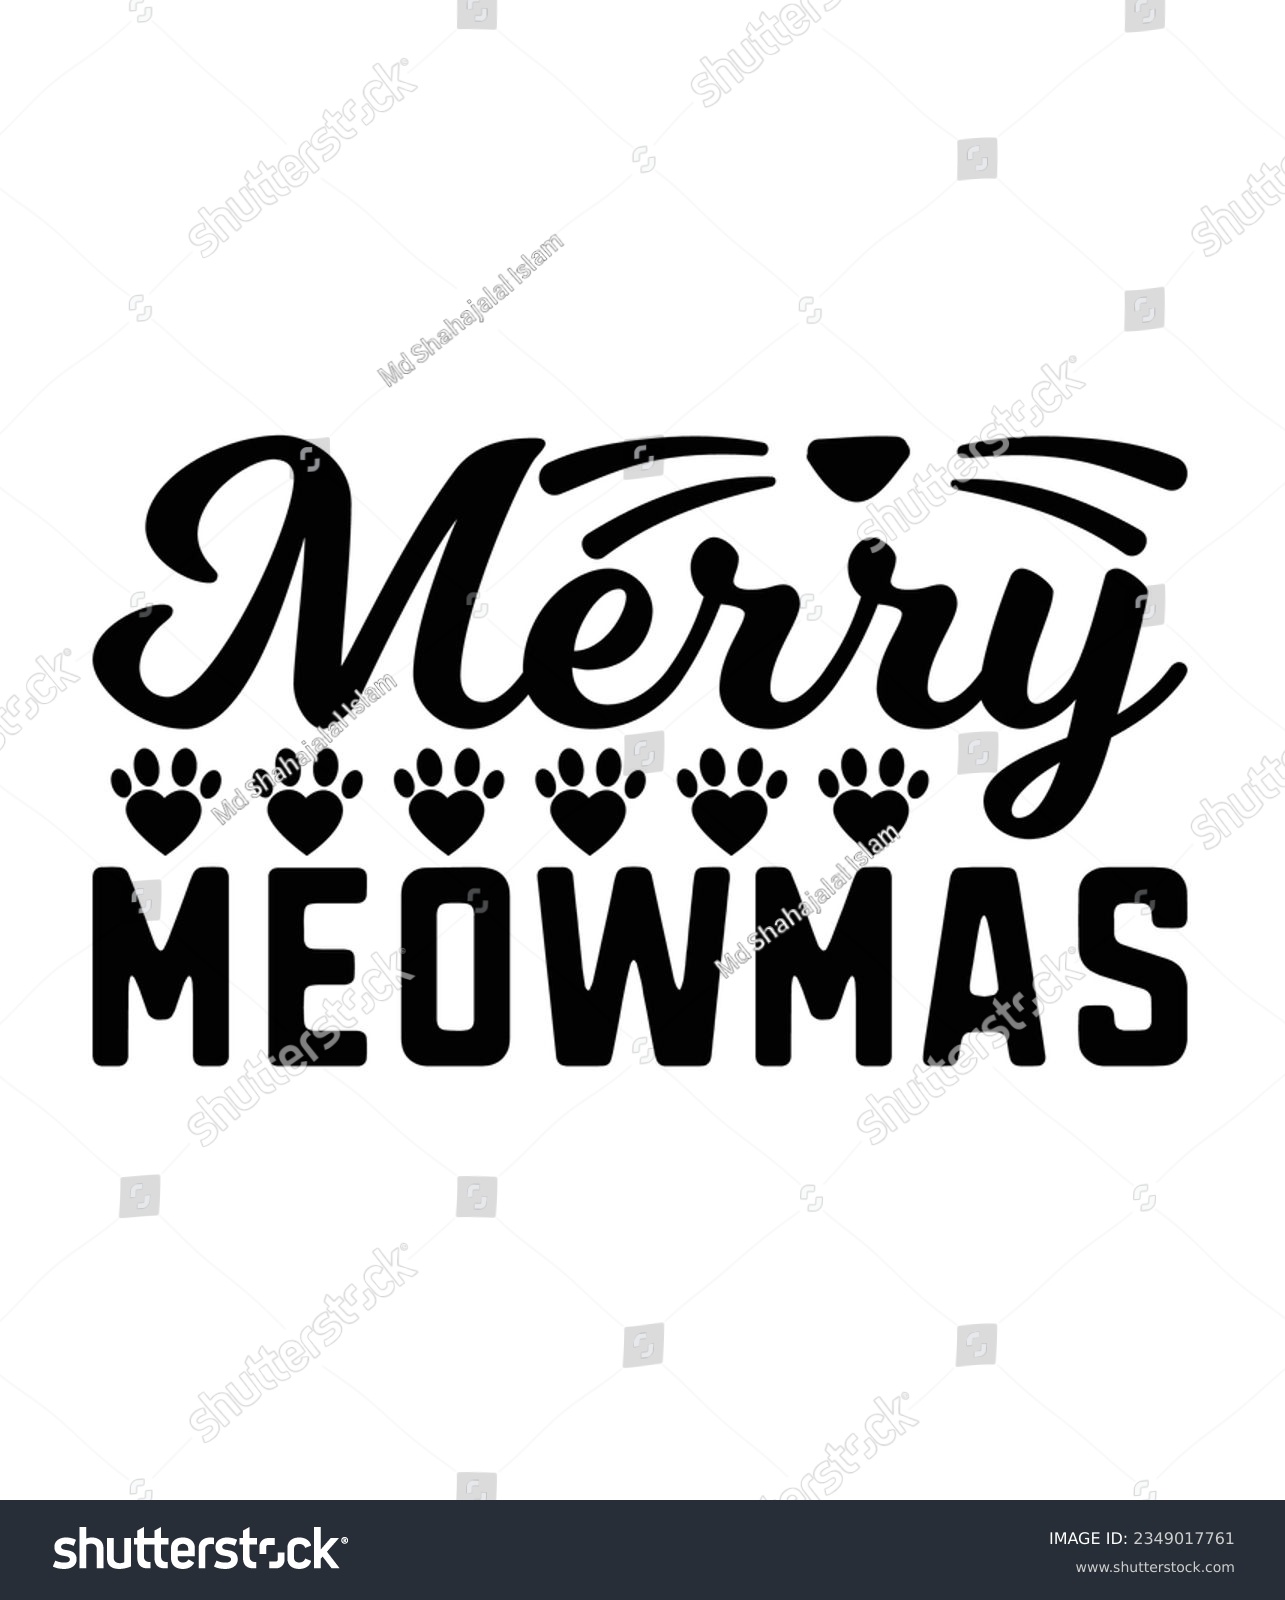 SVG of Merry meow mas, Christmas SVG, Funny Christmas Quotes, Winter SVG, Merry Christmas, Santa SVG, typography, vintage, t shirts design, Holiday shirt svg